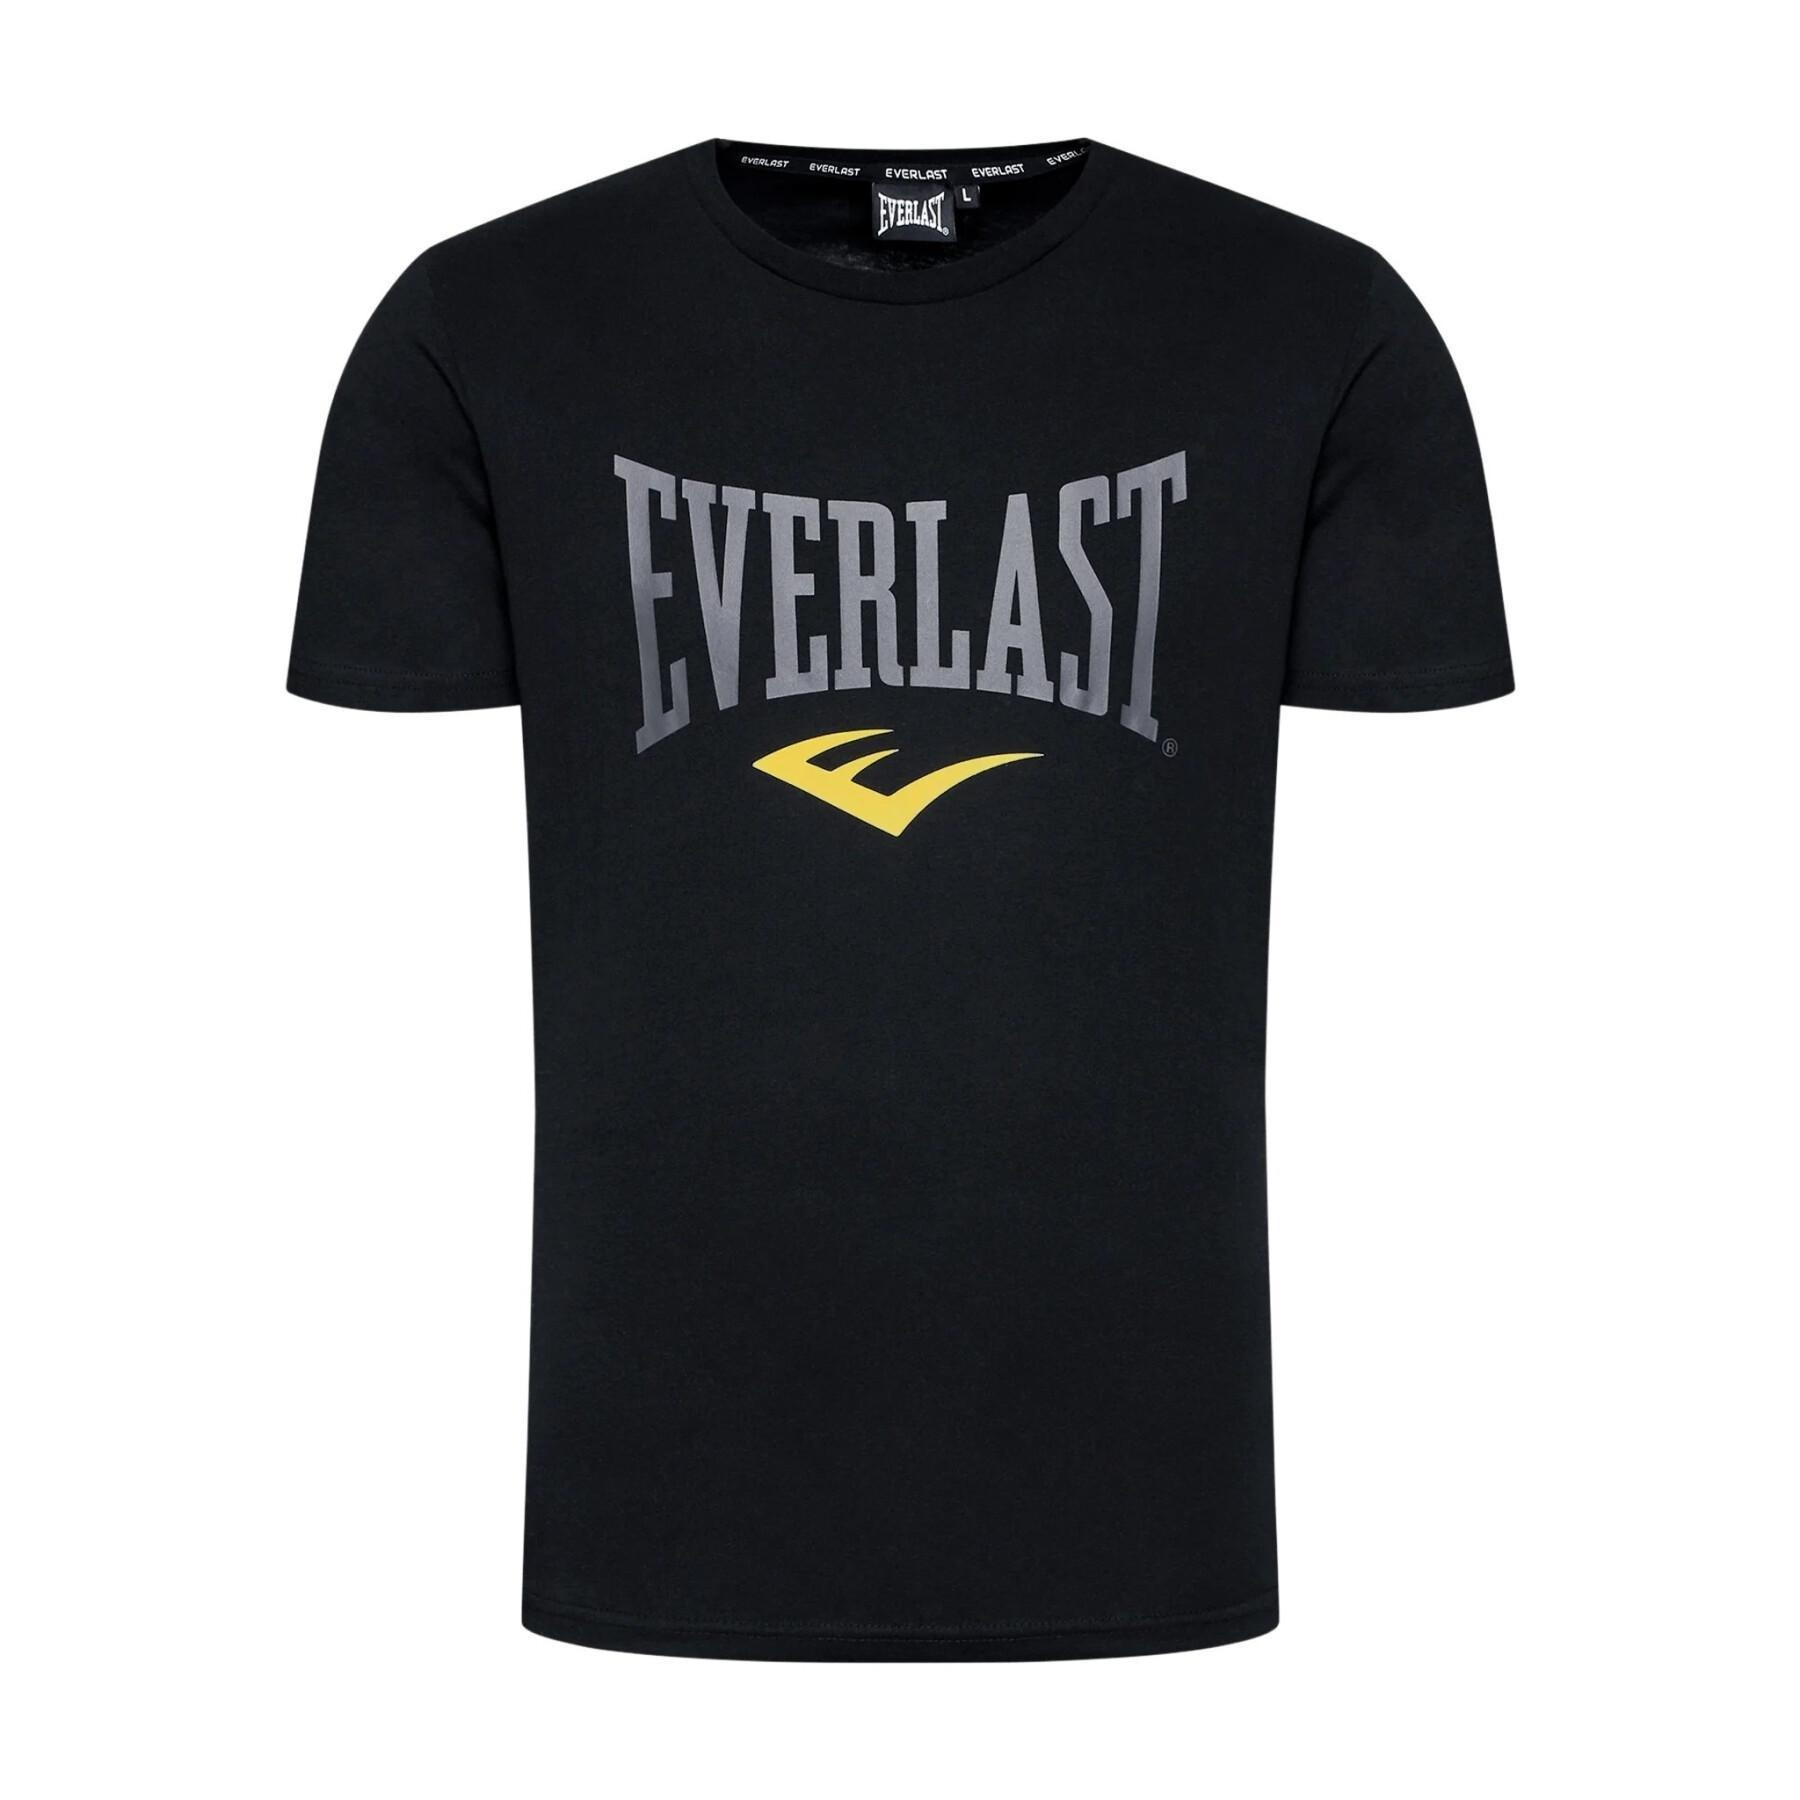 T-Shirt manches courtes Everlast Russel pour homme - Black/Yellow - 807580-60-82